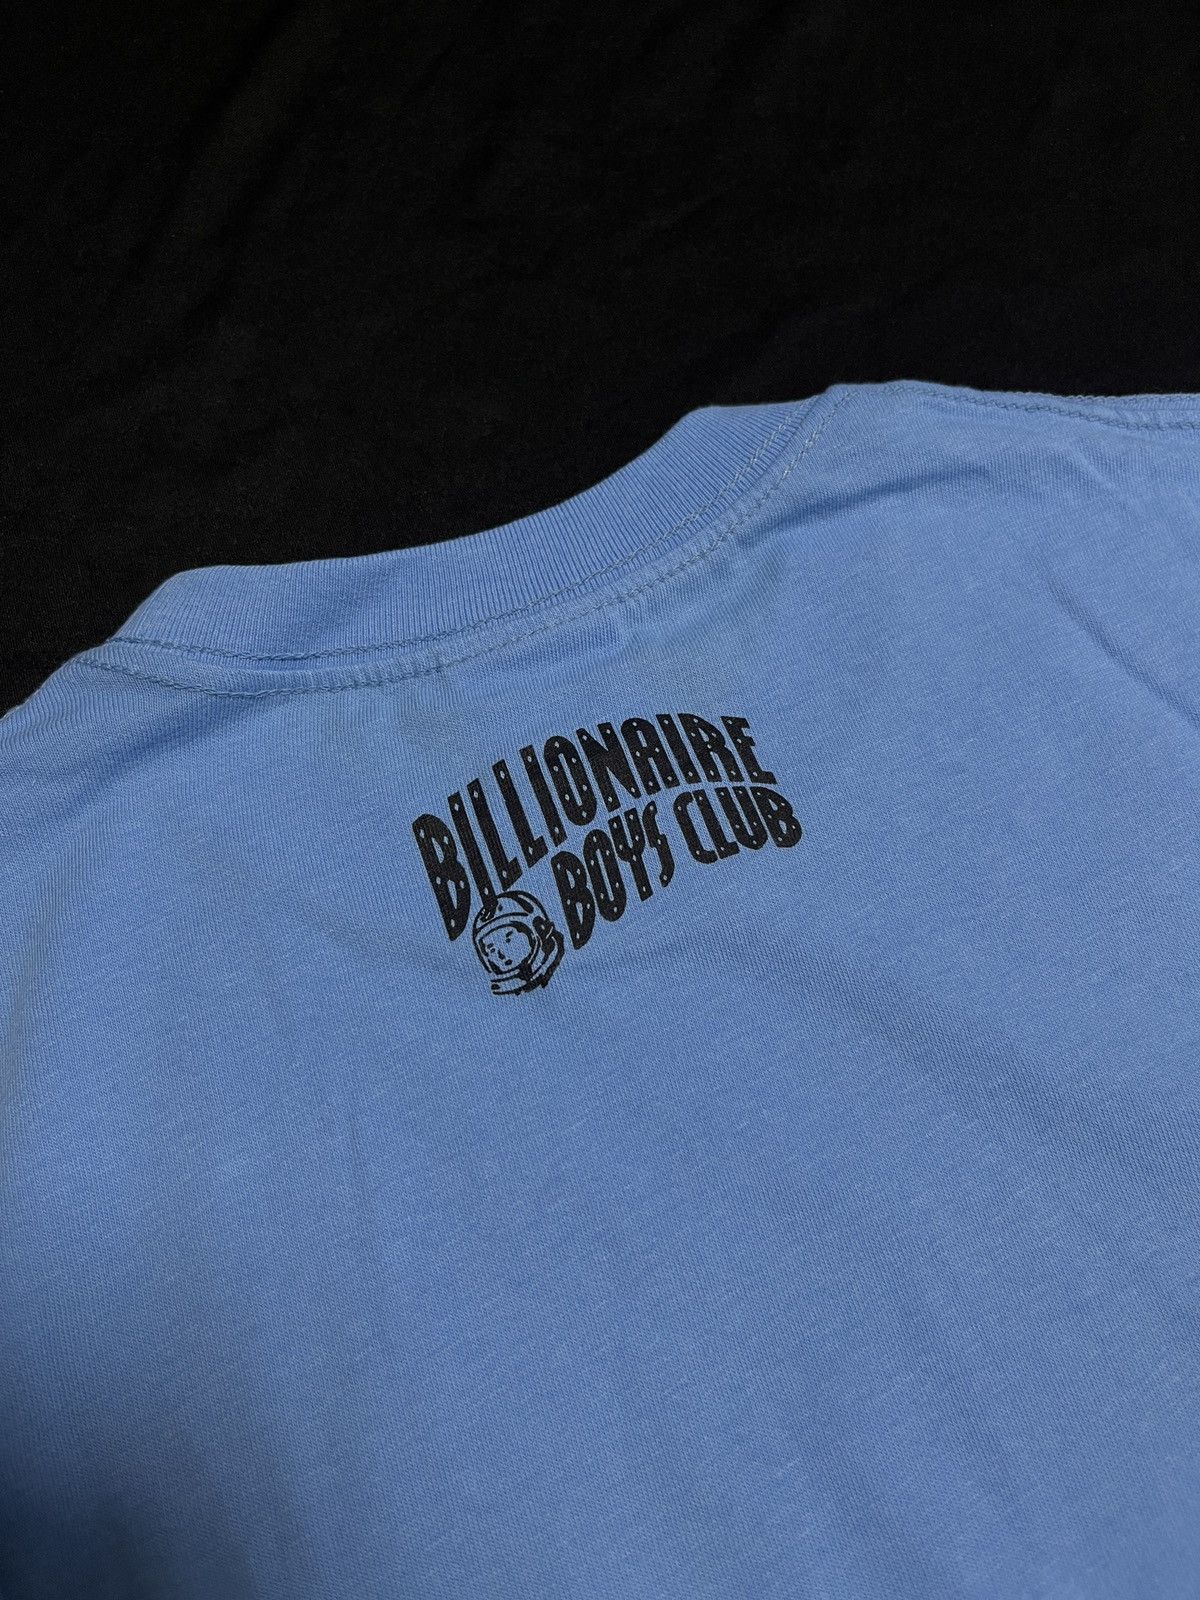 Rare Billionaire Boys Club BBC Helmet Print T-Shirt Blue Medium - 6